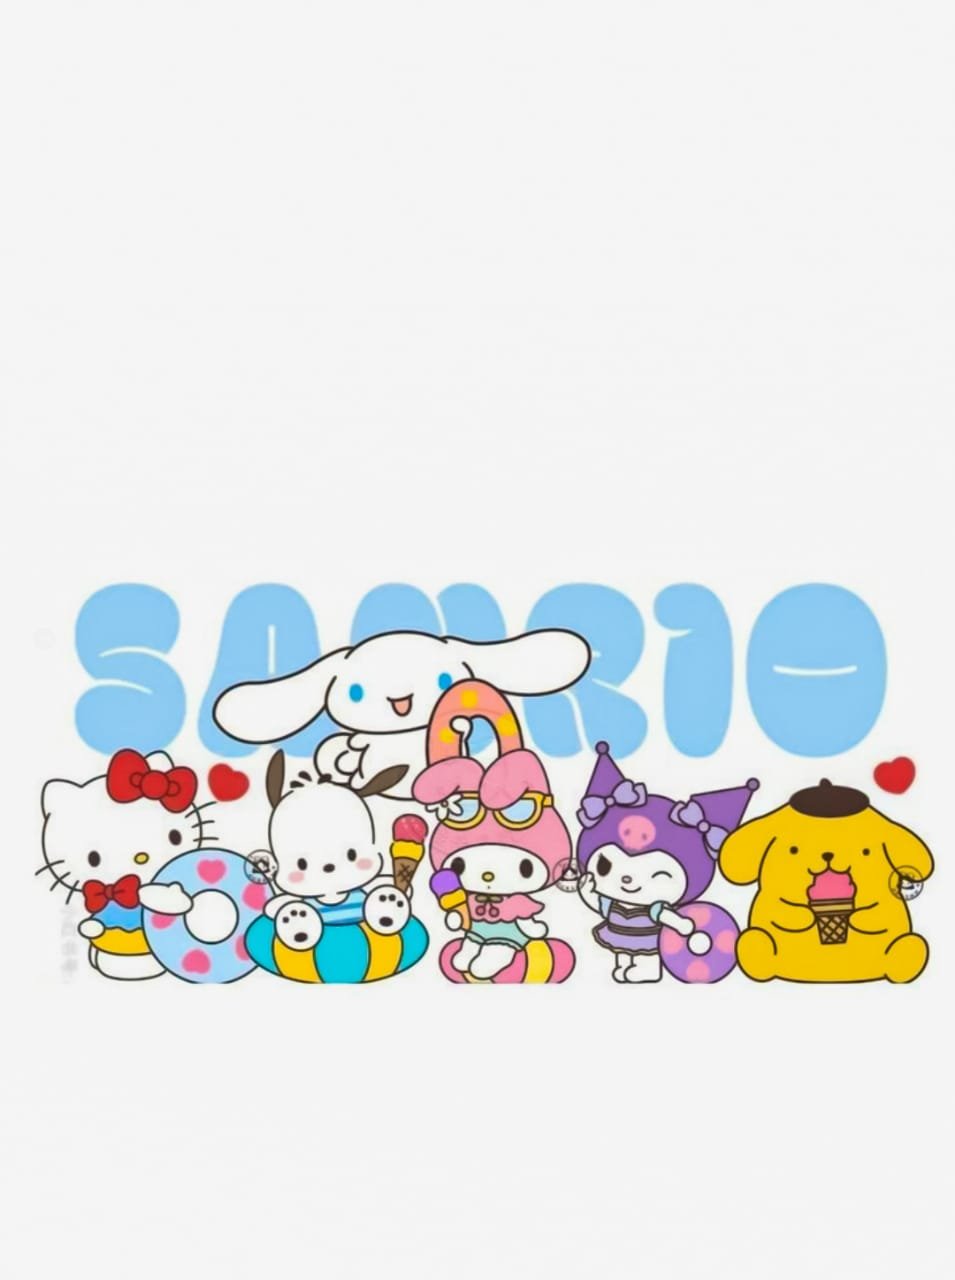 Aesthetic Sanrio Wallpaper Download